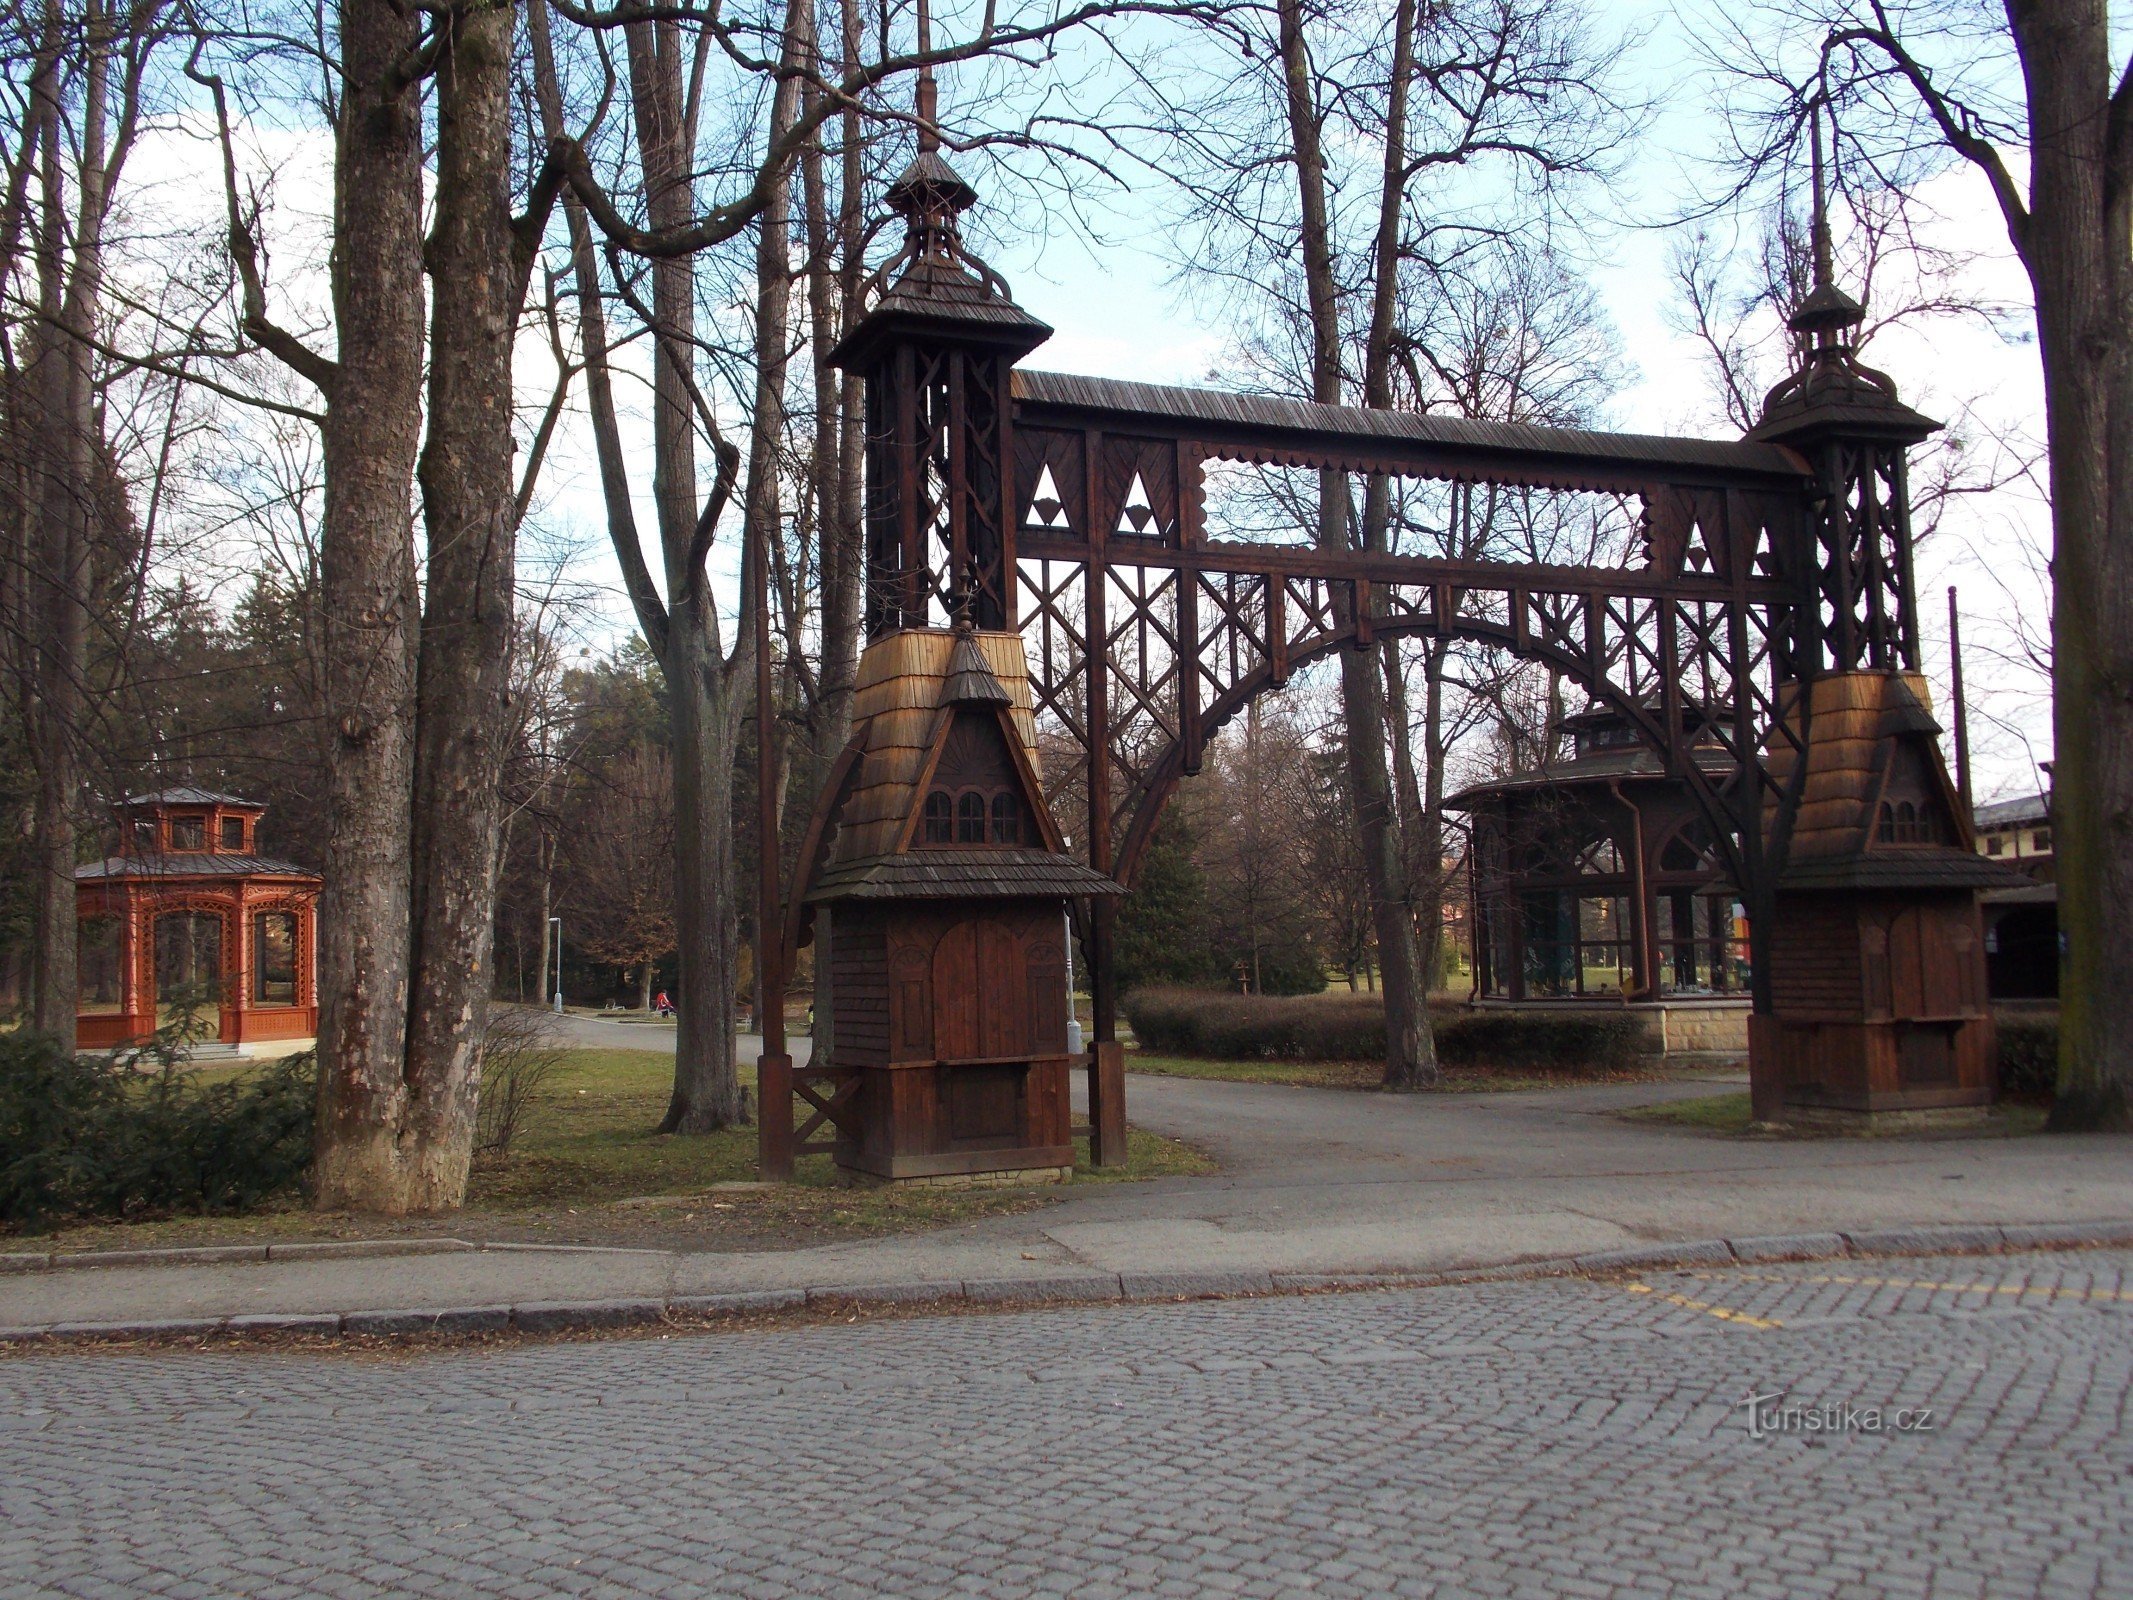 Um passeio pelo parque termal em Rožnov pod Radhoštěm